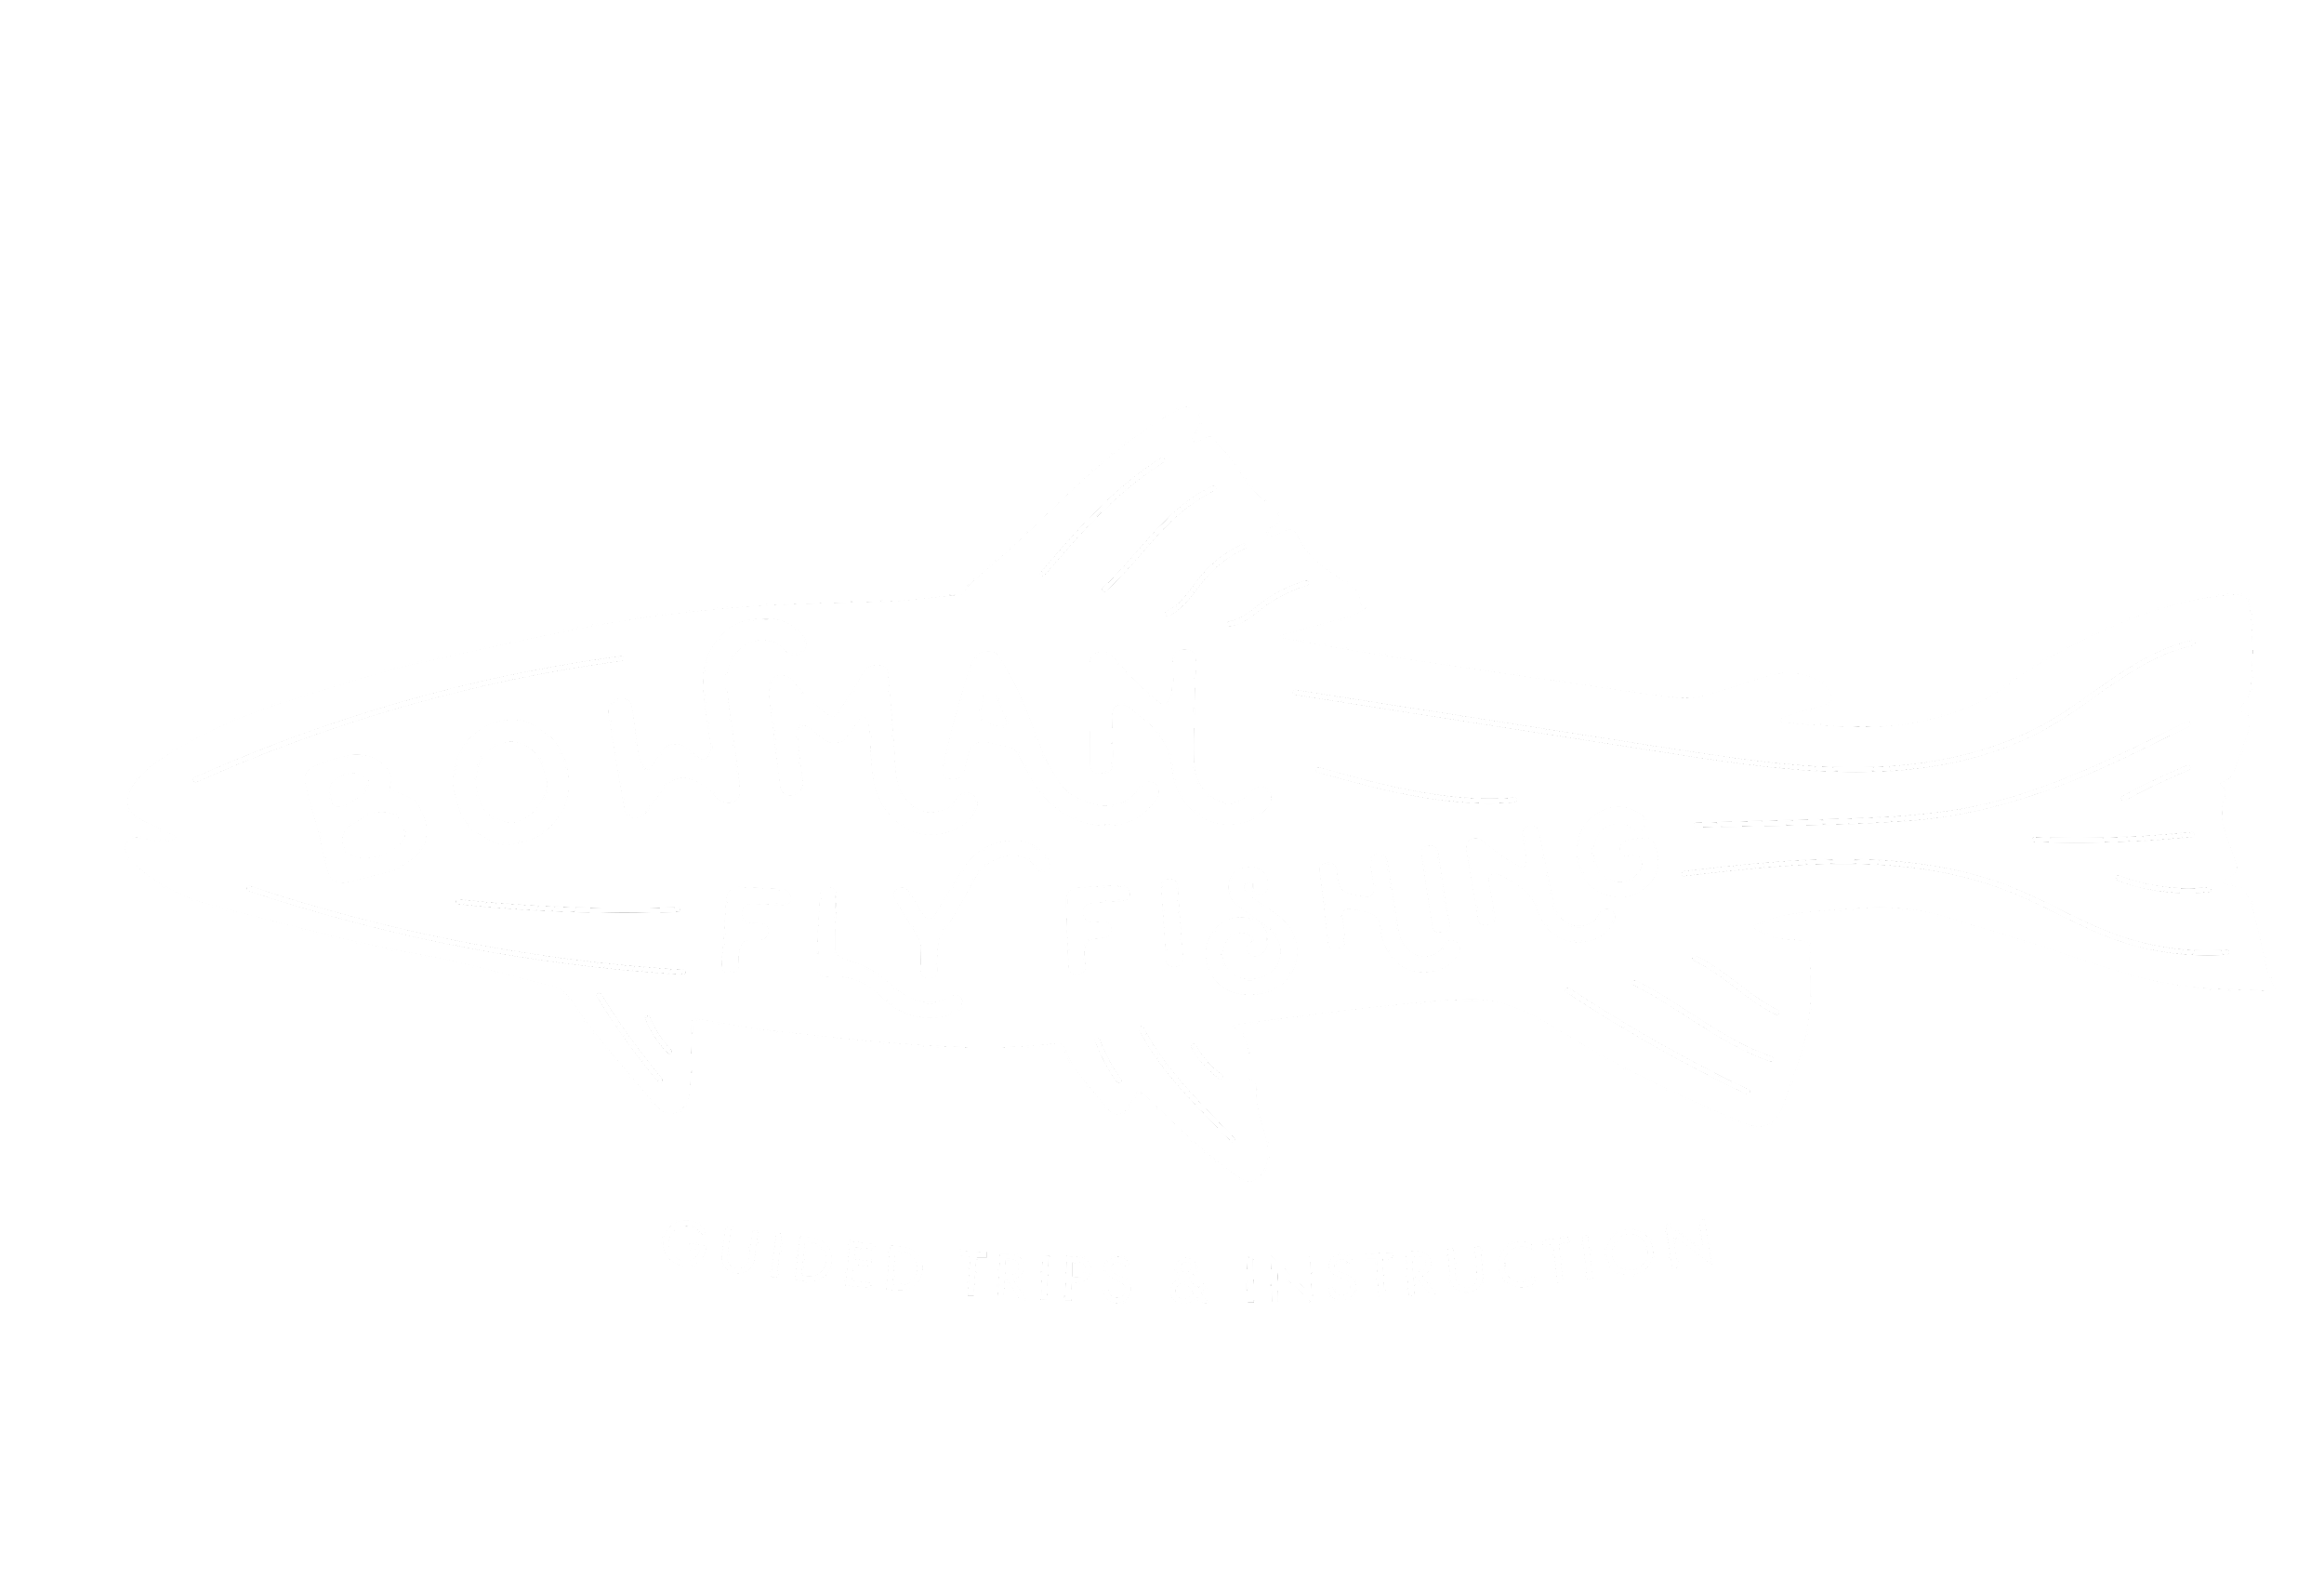 Bowman Fly Fishing